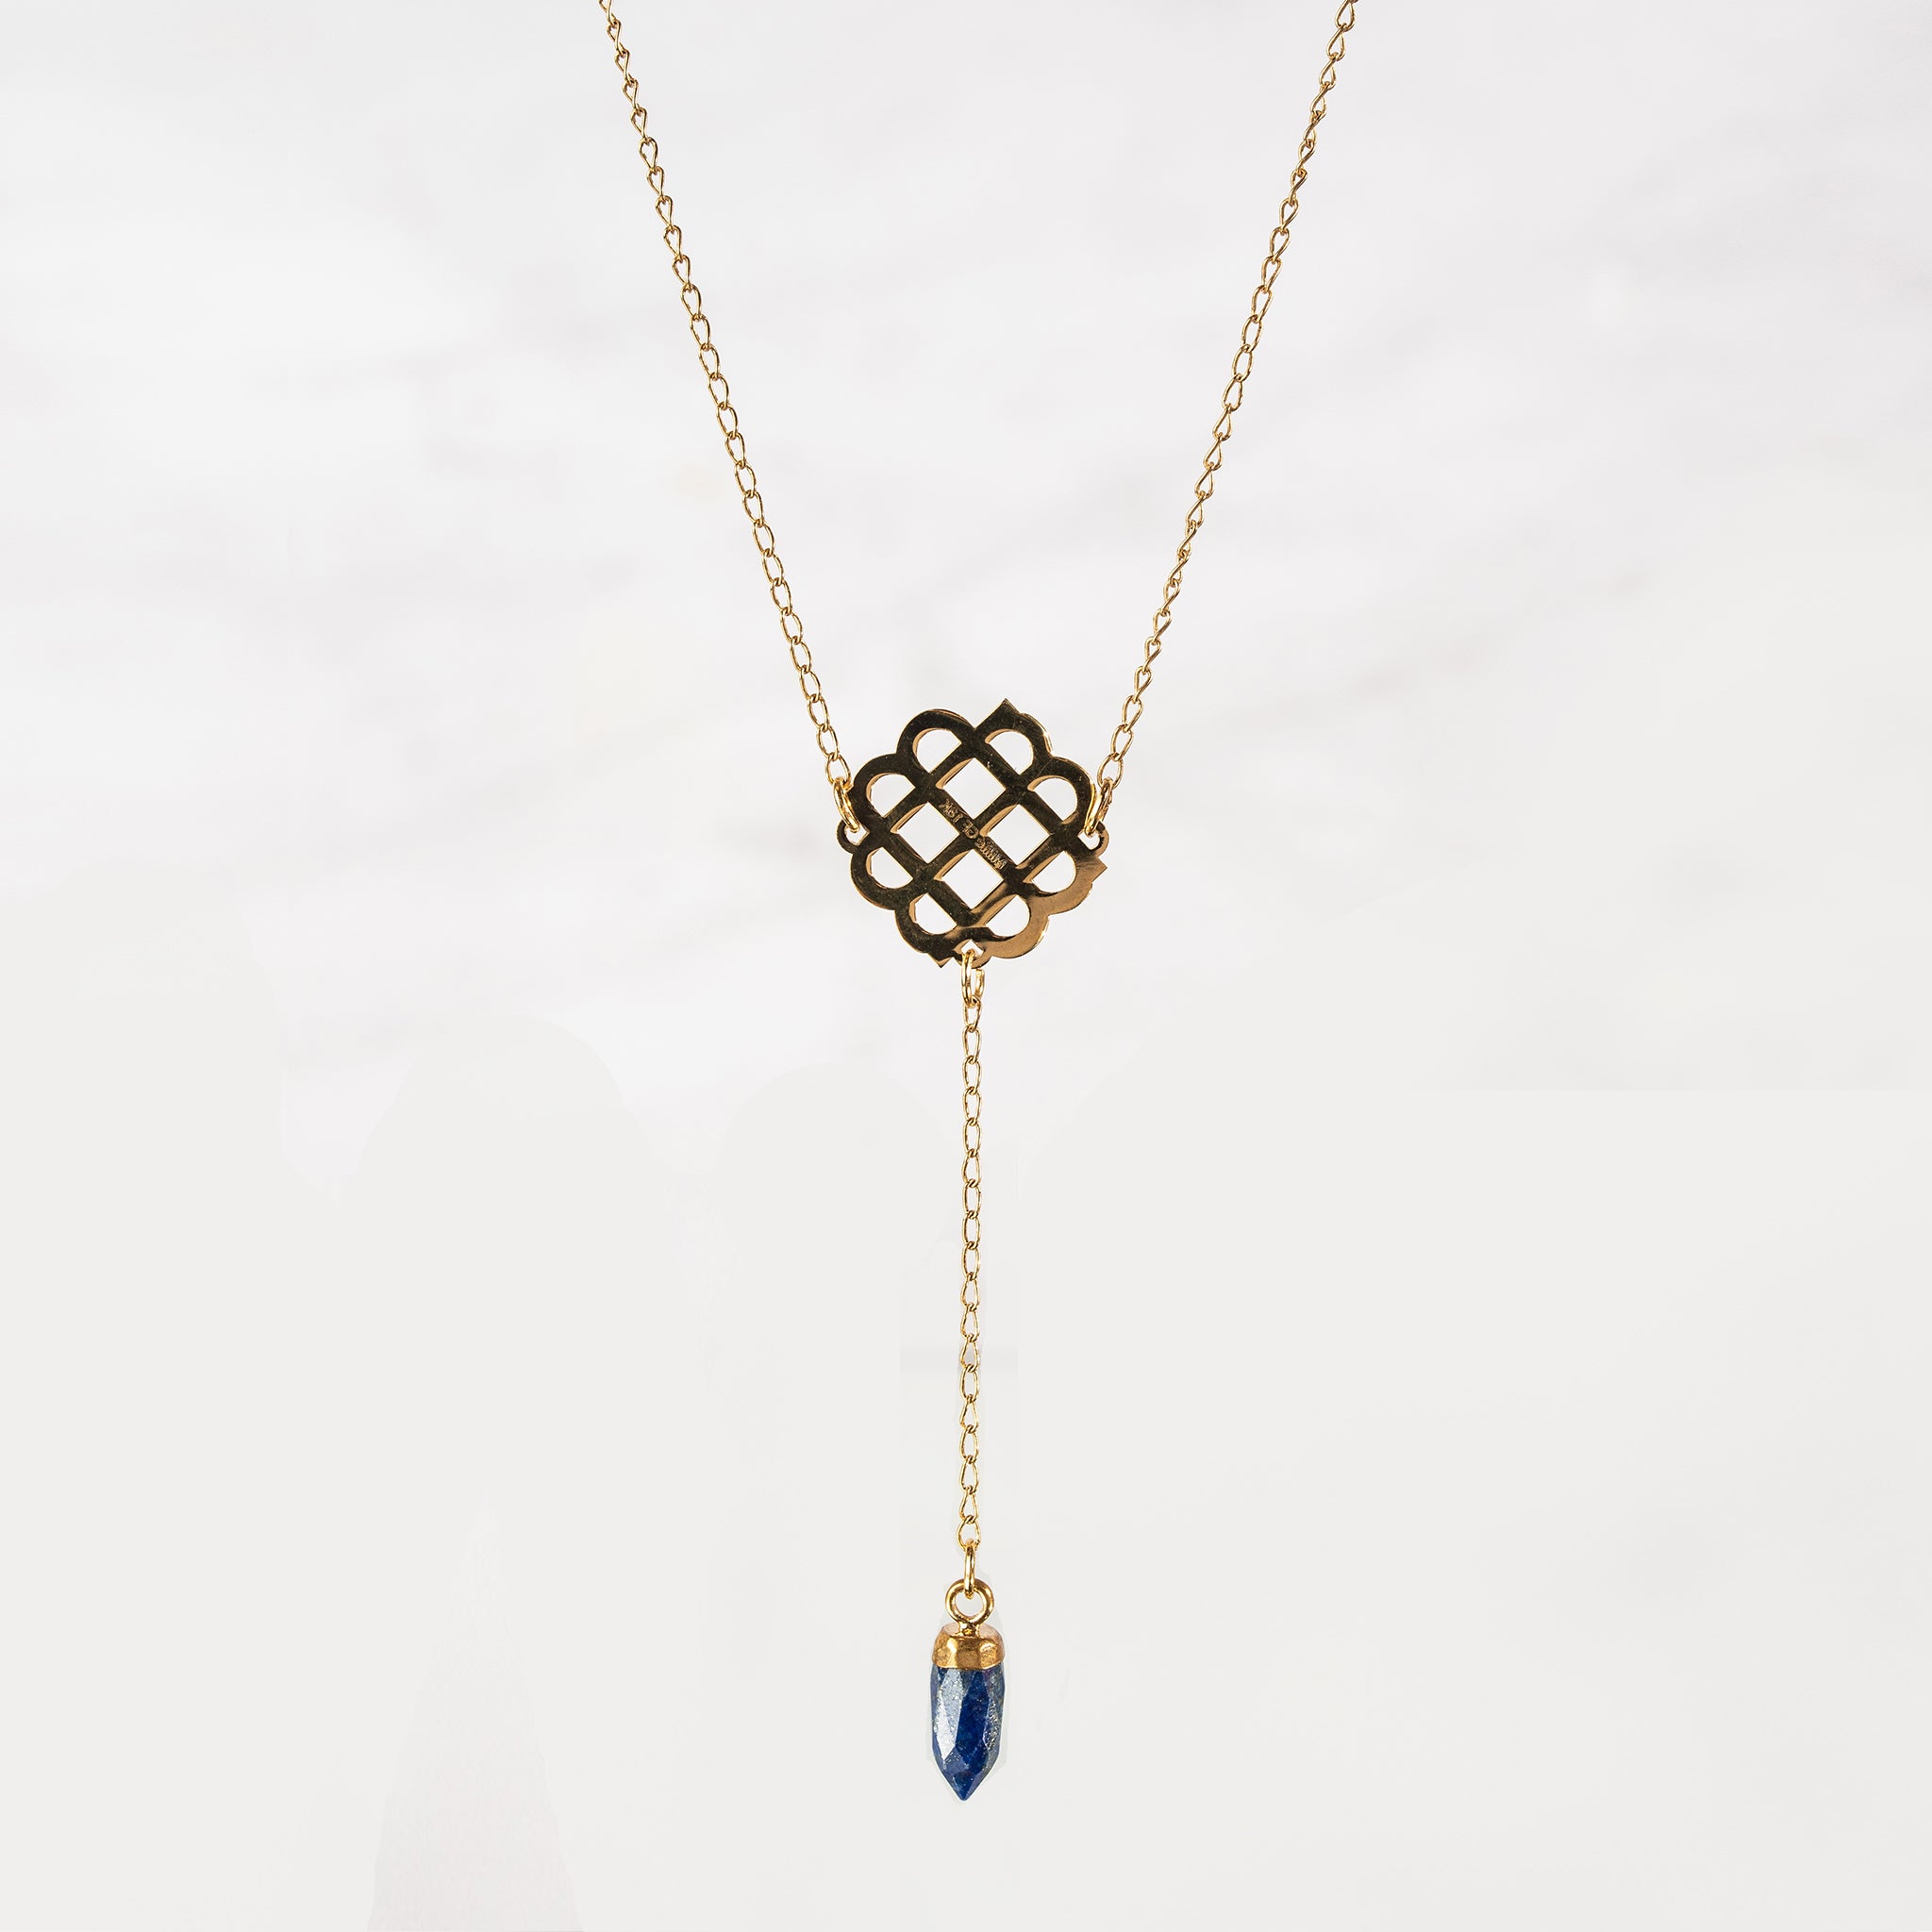 Millié Jewelry - Millié Jewelry - Millié Stone Lariat Necklace - Collares - Diseño Mexicano - Hecho en México